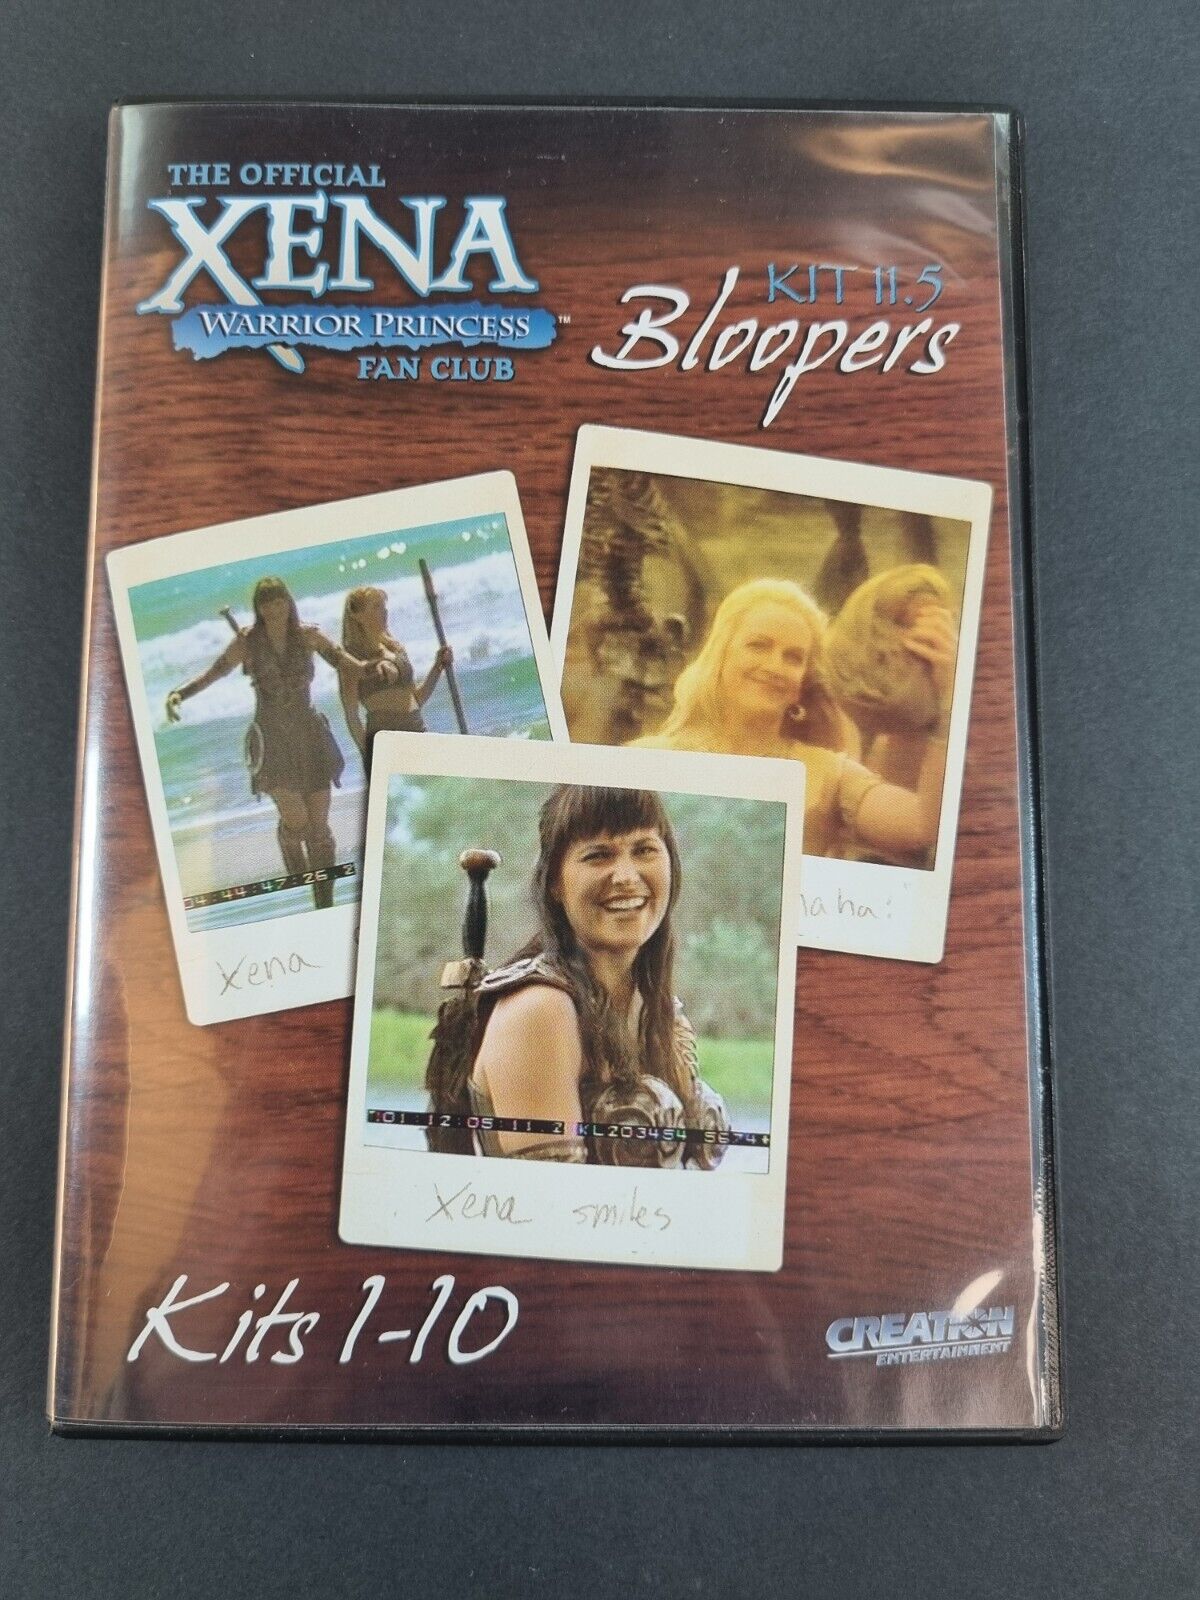 RARE XENA: WARRIOR PRINCESS Fan Club Kit #11.5 (ALL BLOOPERS from KITS 1-10) DVD